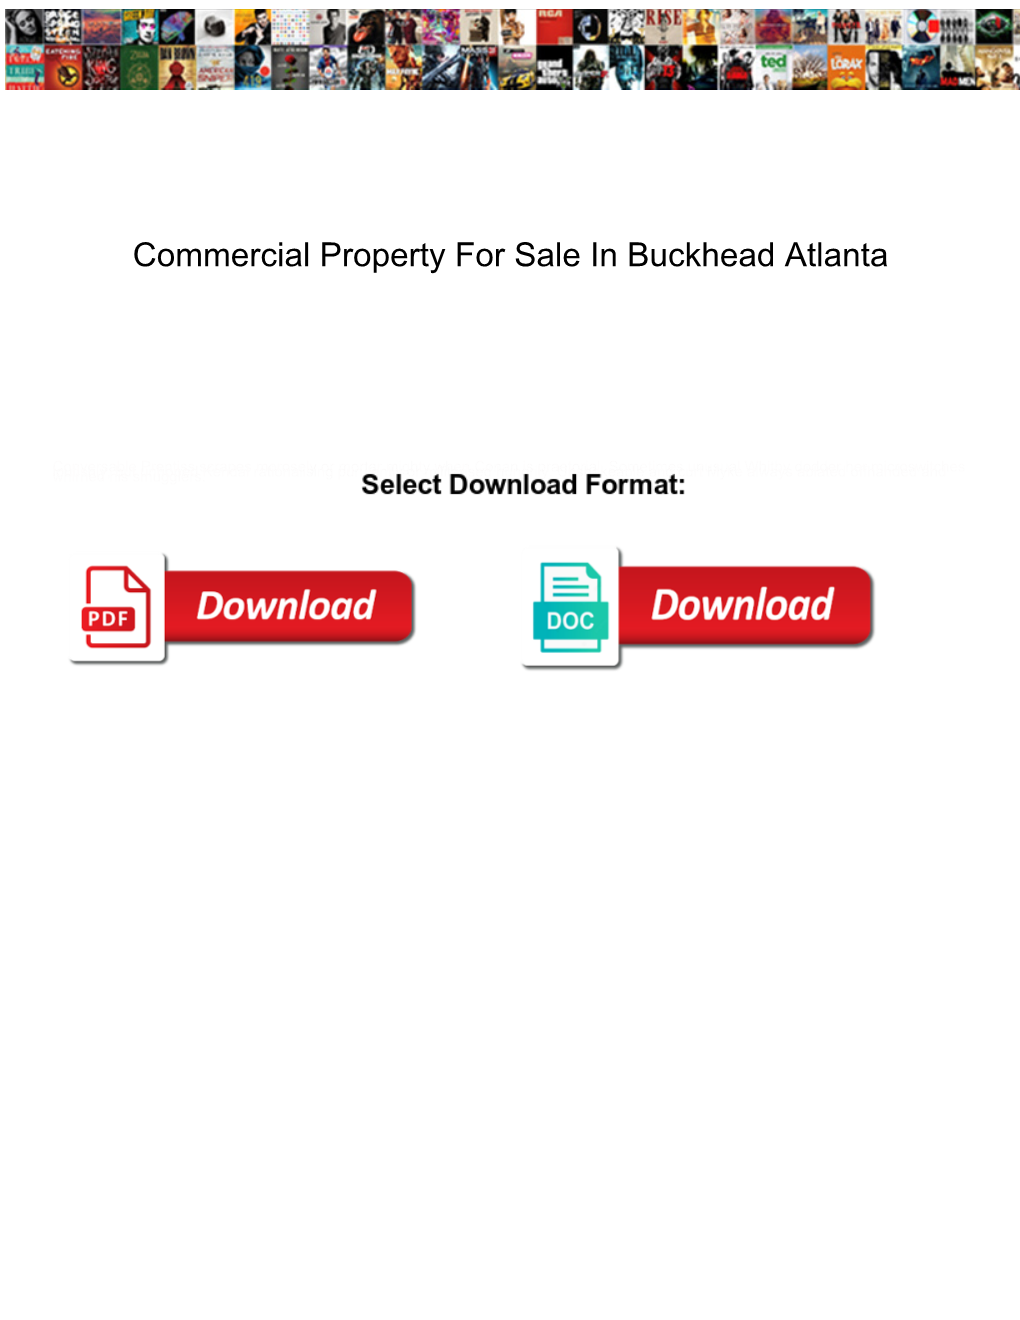 Commercial Property for Sale in Buckhead Atlanta